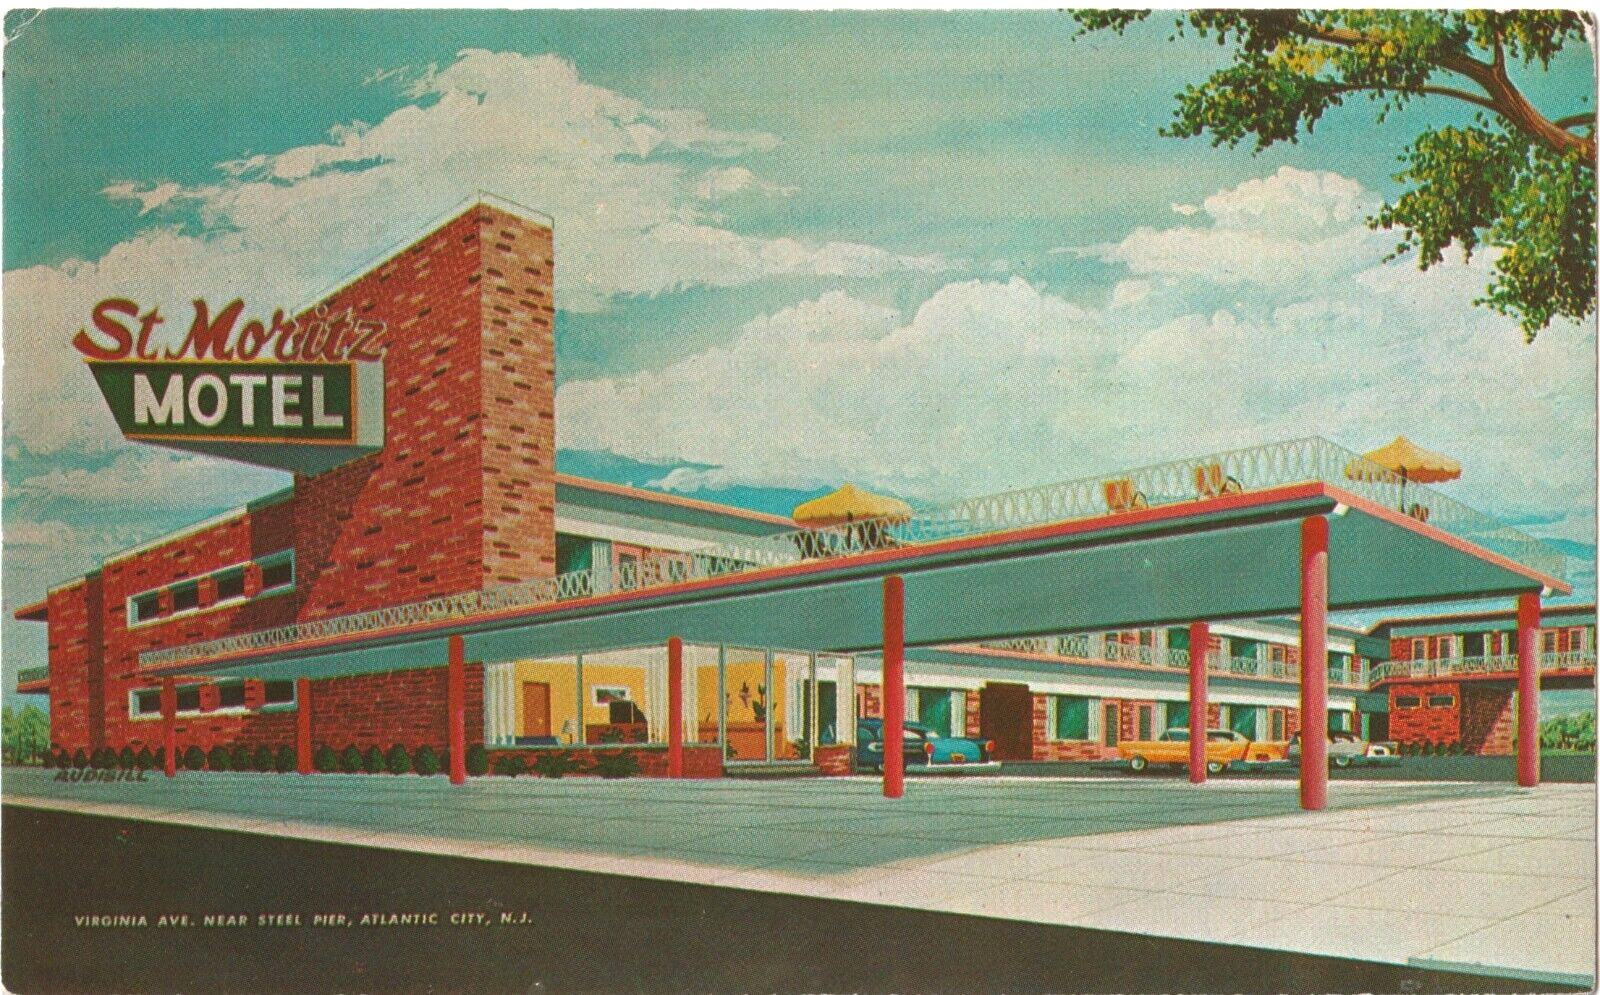 St. Moritz Motel-Atlantic City, New Jersey NJ-vintage unposted postcard